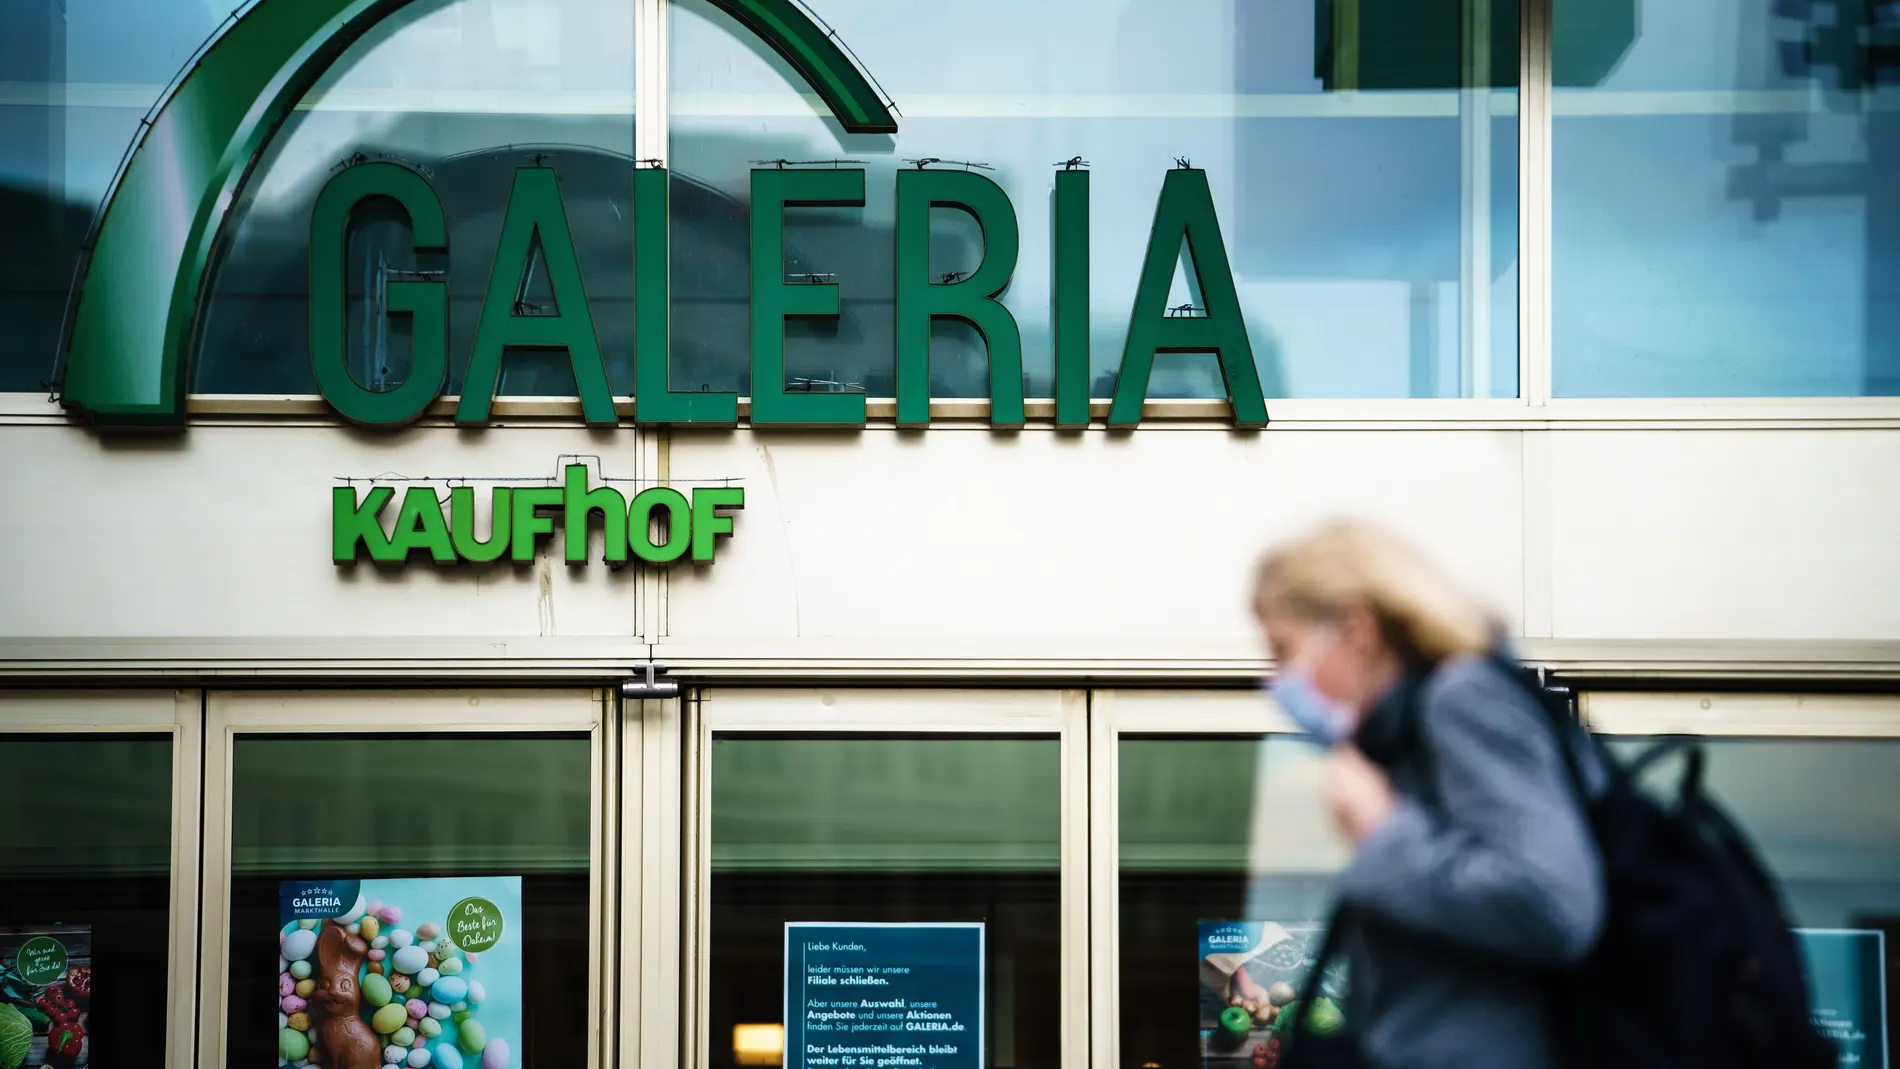 Galeria Karstadt Kaufhof applies for financial aid due to coronavirus crisis